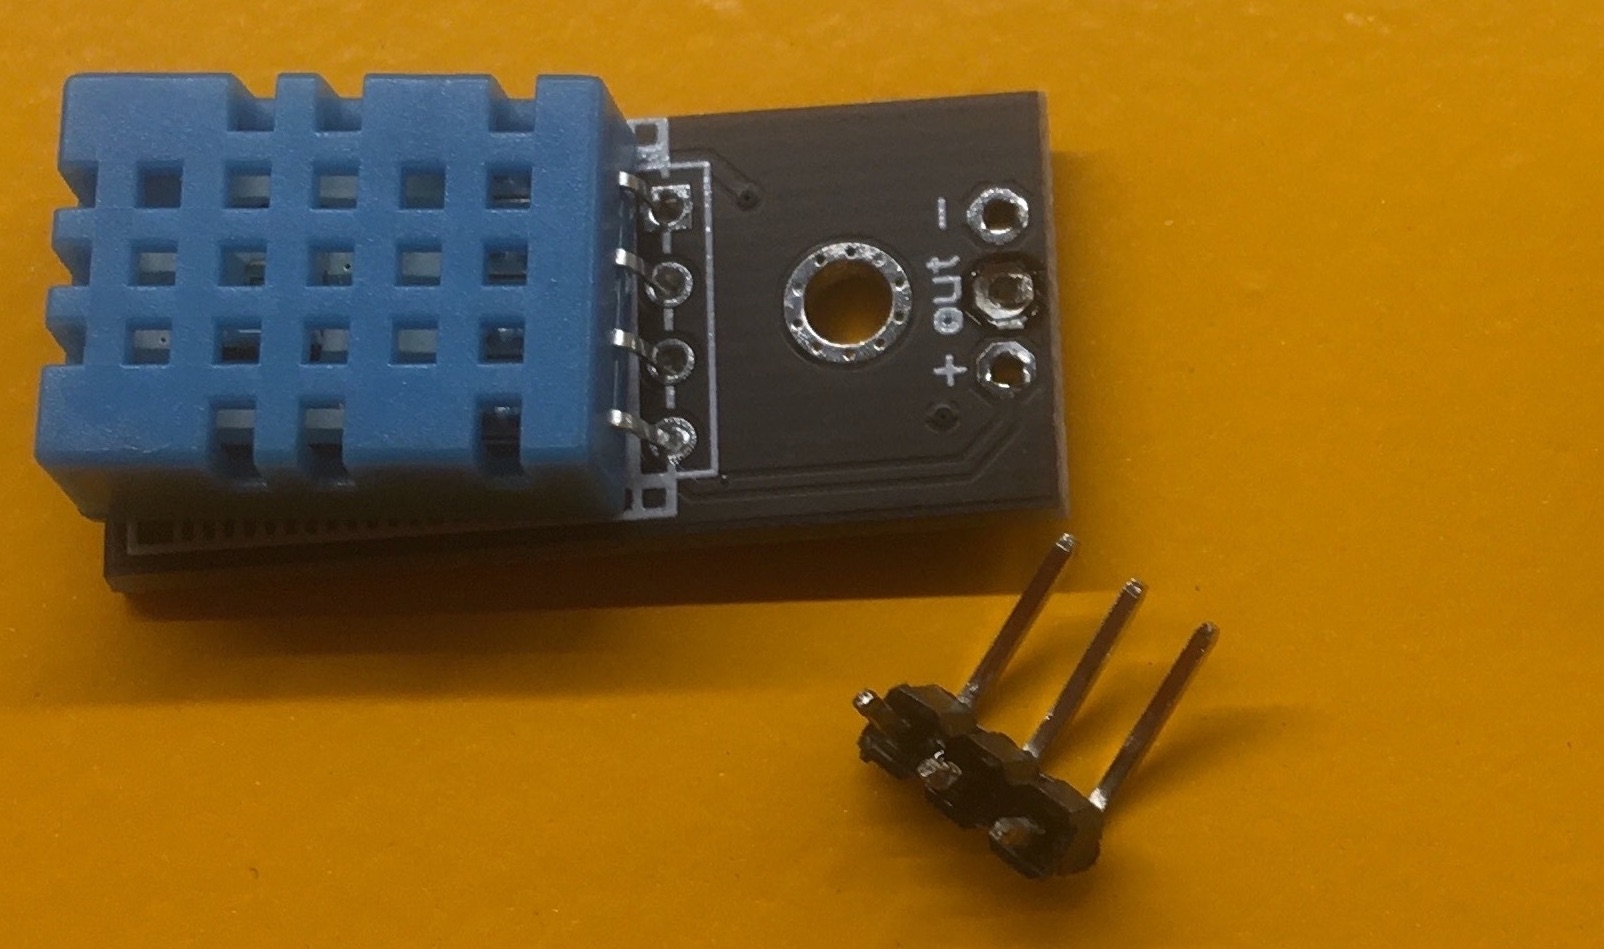 Humidity Sensor with Pins Desoldered